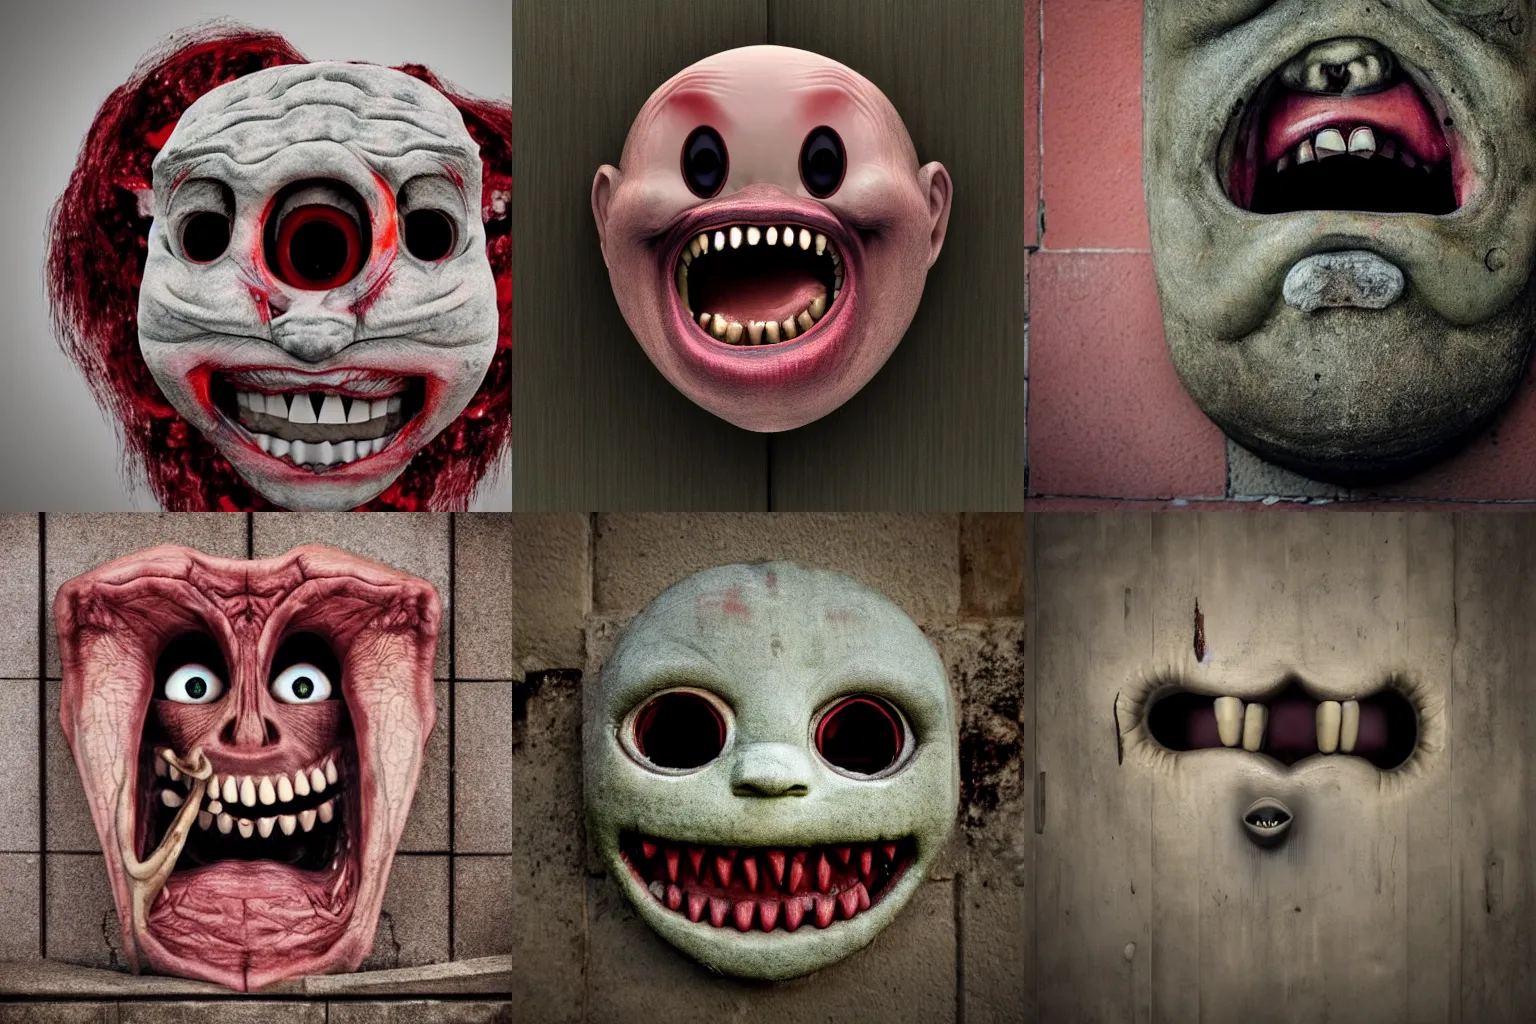 Prompt: wall with protruding eyes, teeth, teeth, skin, blood, teeth, hair, teeth, teeth, horror, creepy, realistic